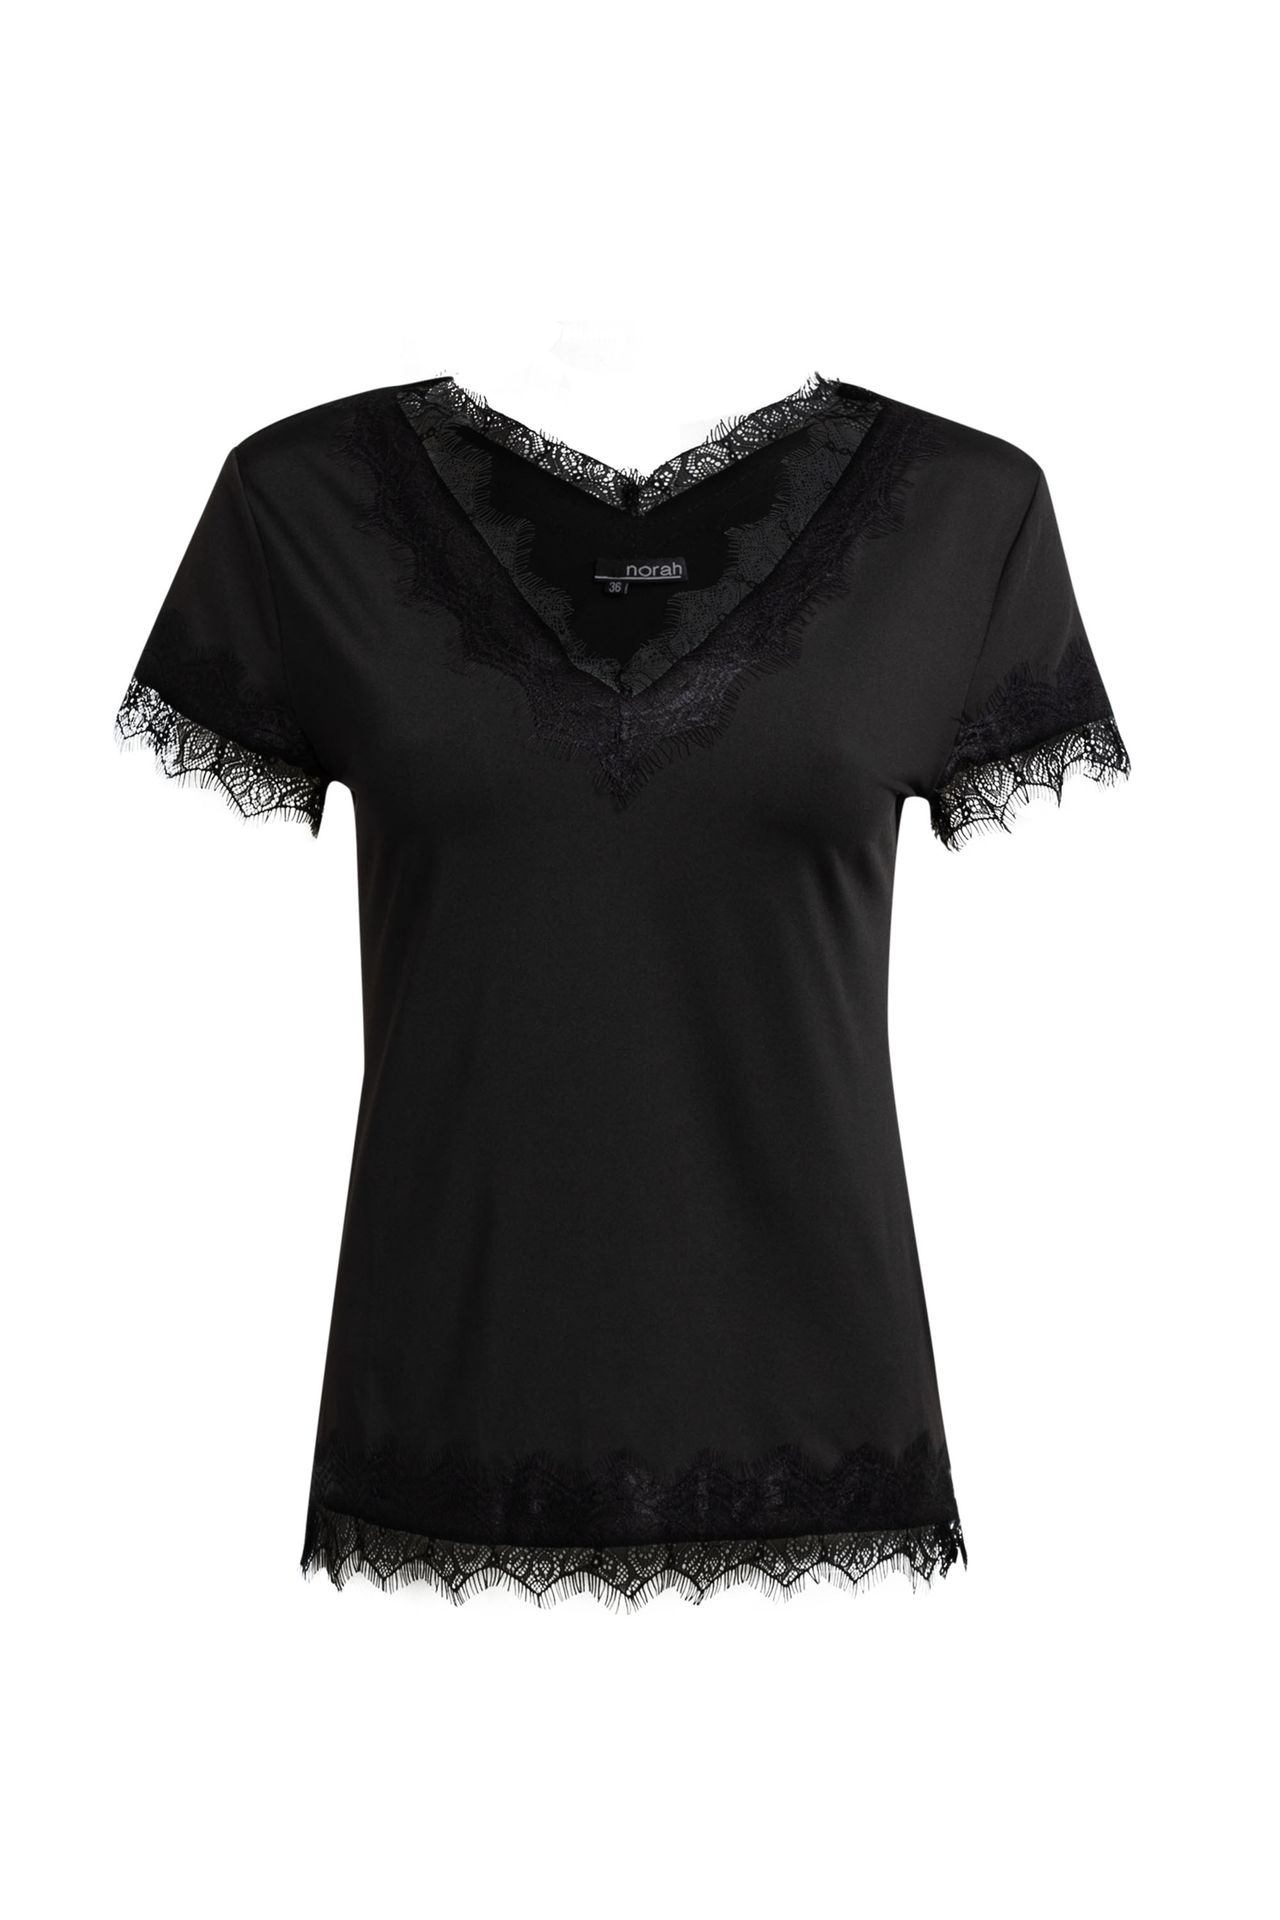 Norah Shirt zwart black 210912-001